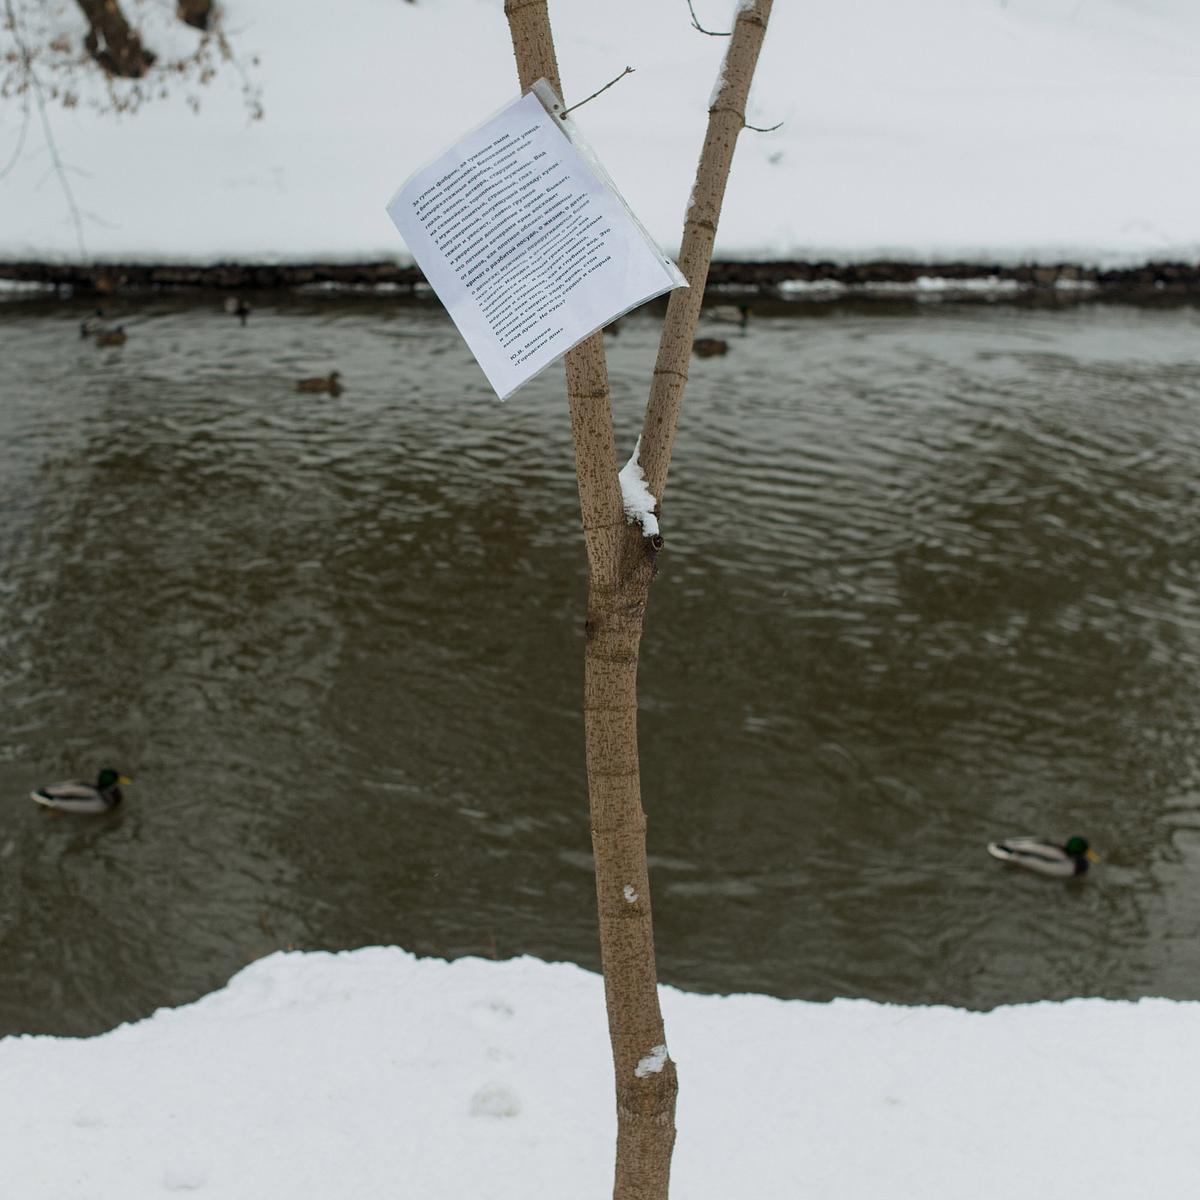 Лист с текстом прибит к стволу дерева на берегу речки с заснеженными берегами